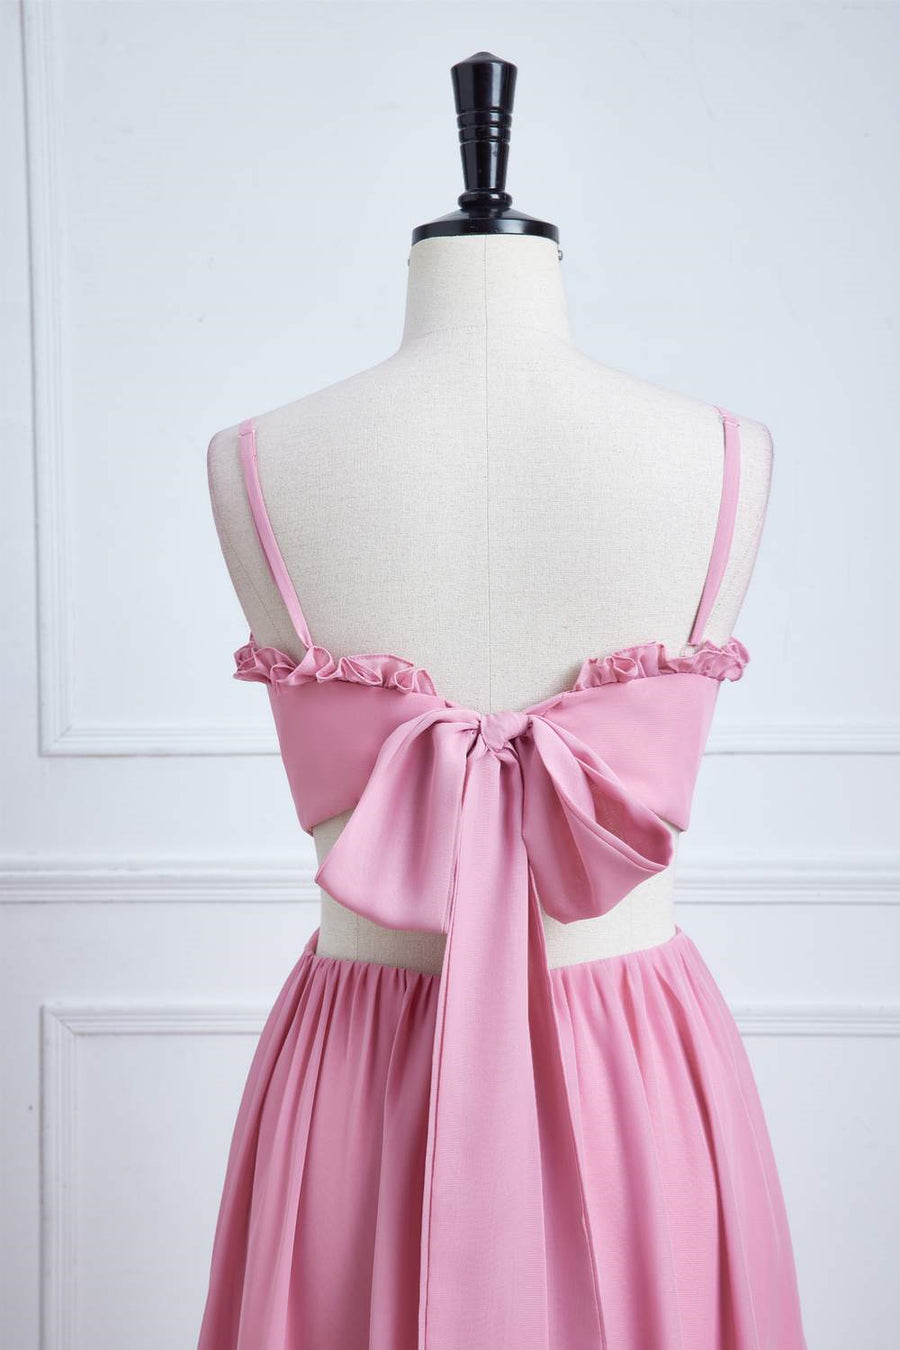 Pink Ruffled Spaghetti Straps Bow Tie Back Long Bridesmaid Dress